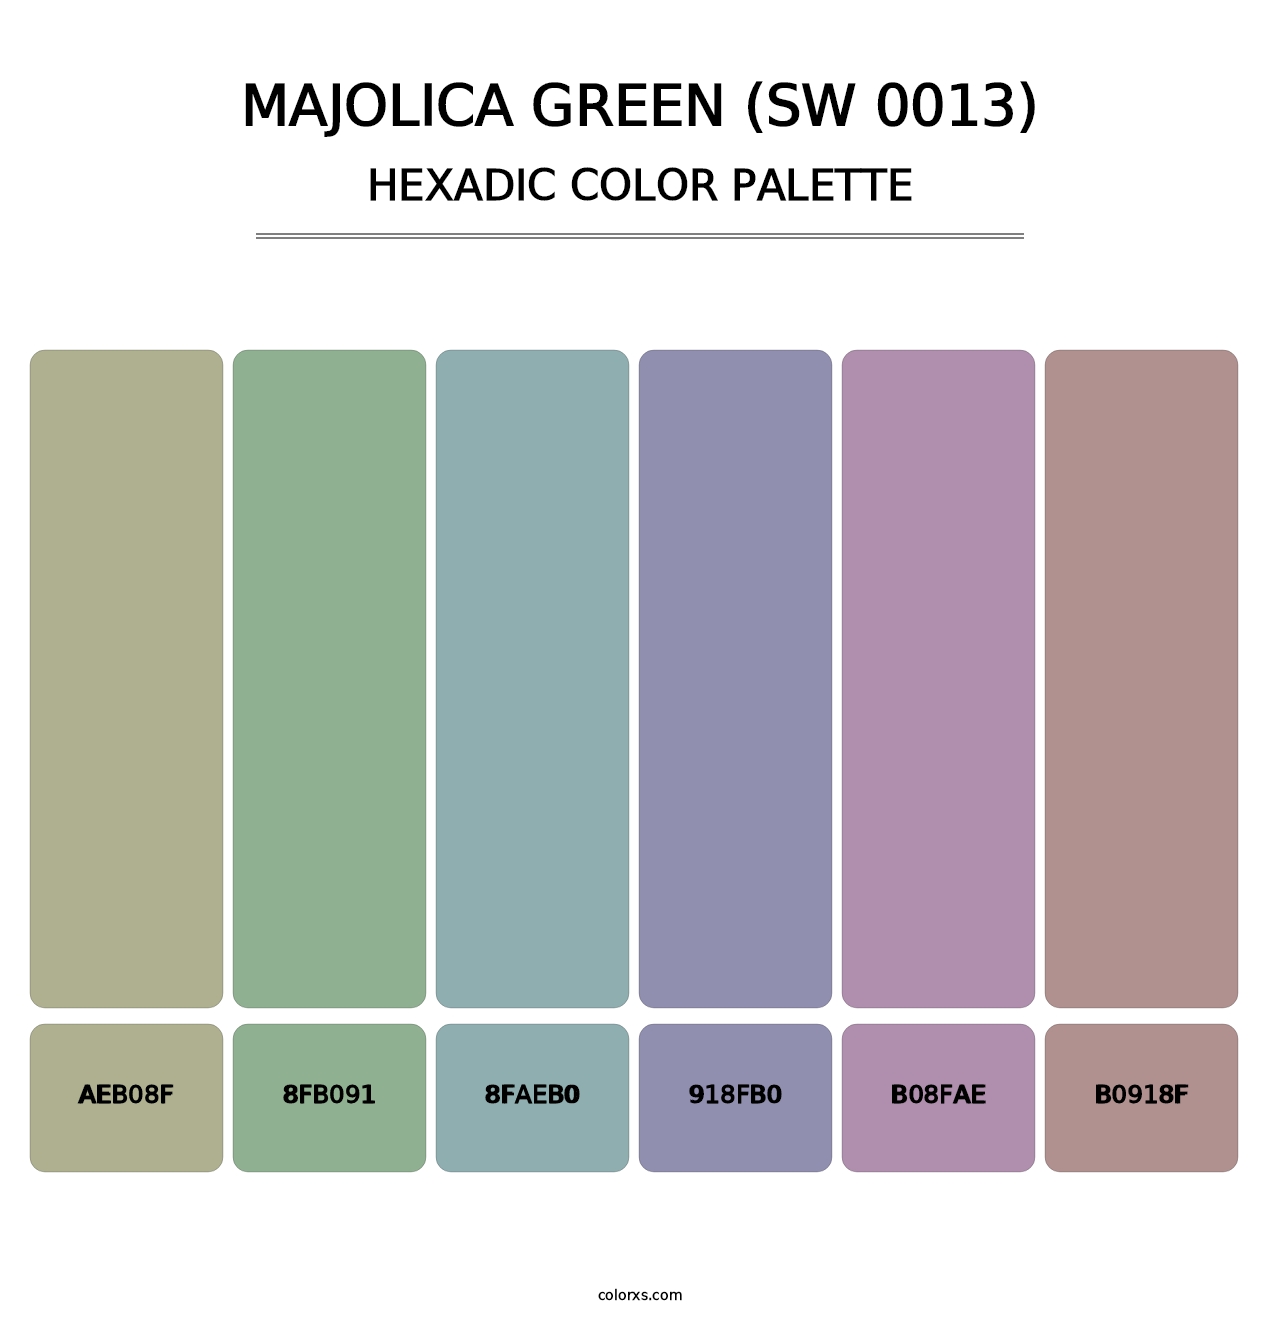 Majolica Green (SW 0013) - Hexadic Color Palette